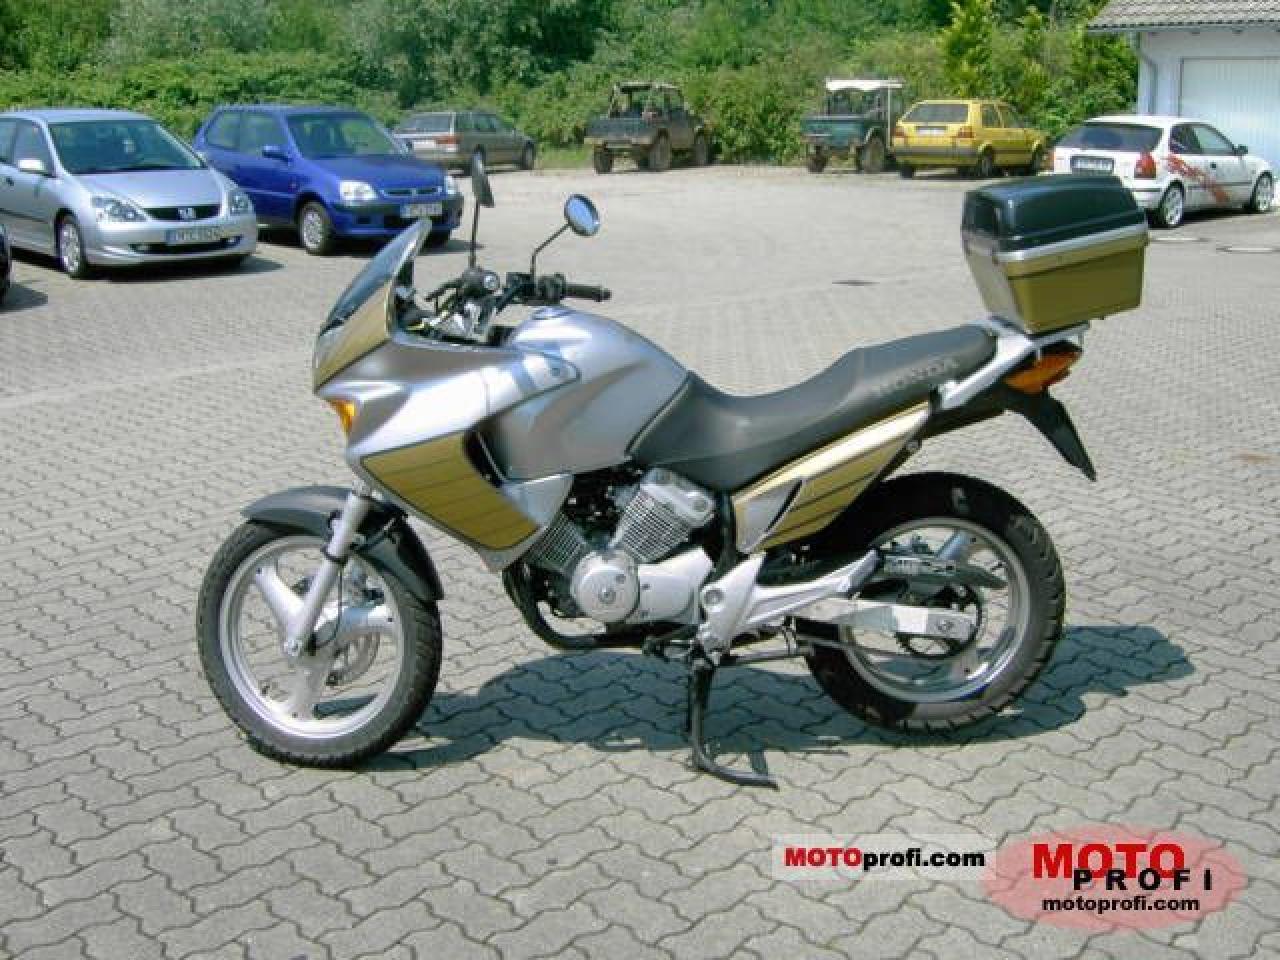 Vendu ! Honda 125 Varadero - 2400€ : à découvrir chez Chambourcy Motos 78